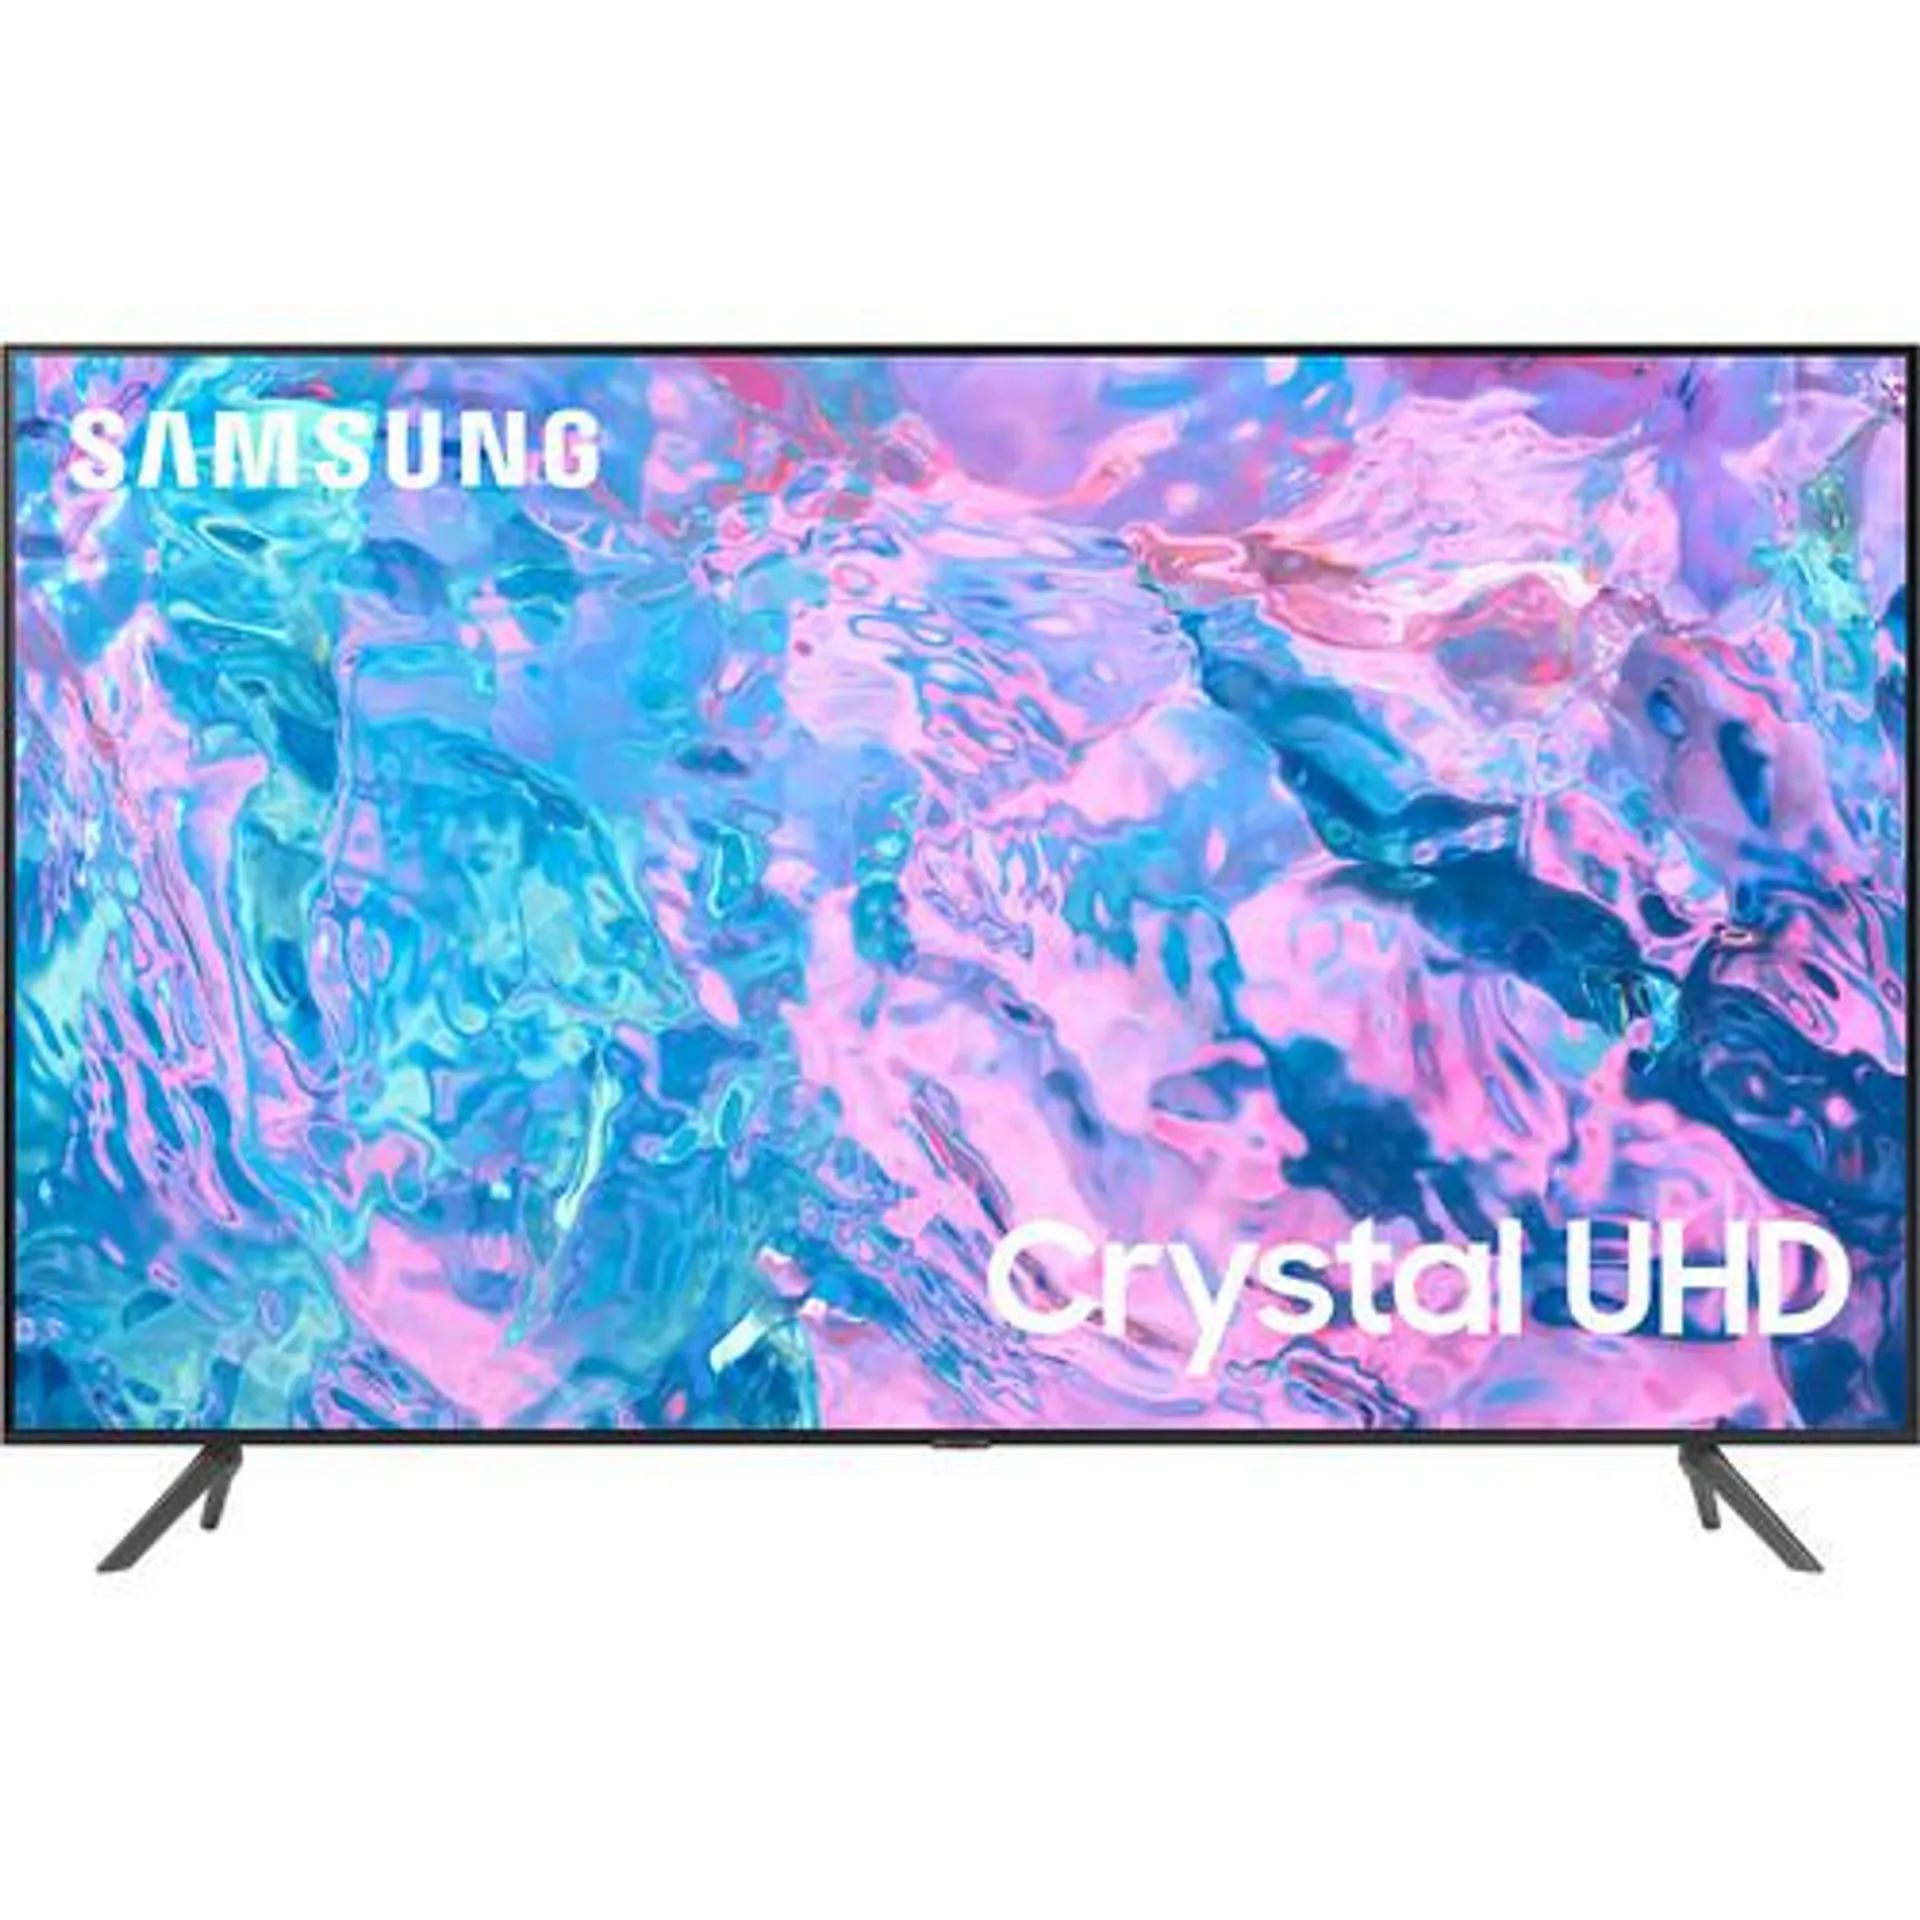 Samsung CU7000 Crystal UHD 70" 4K HDR Smart LED TV